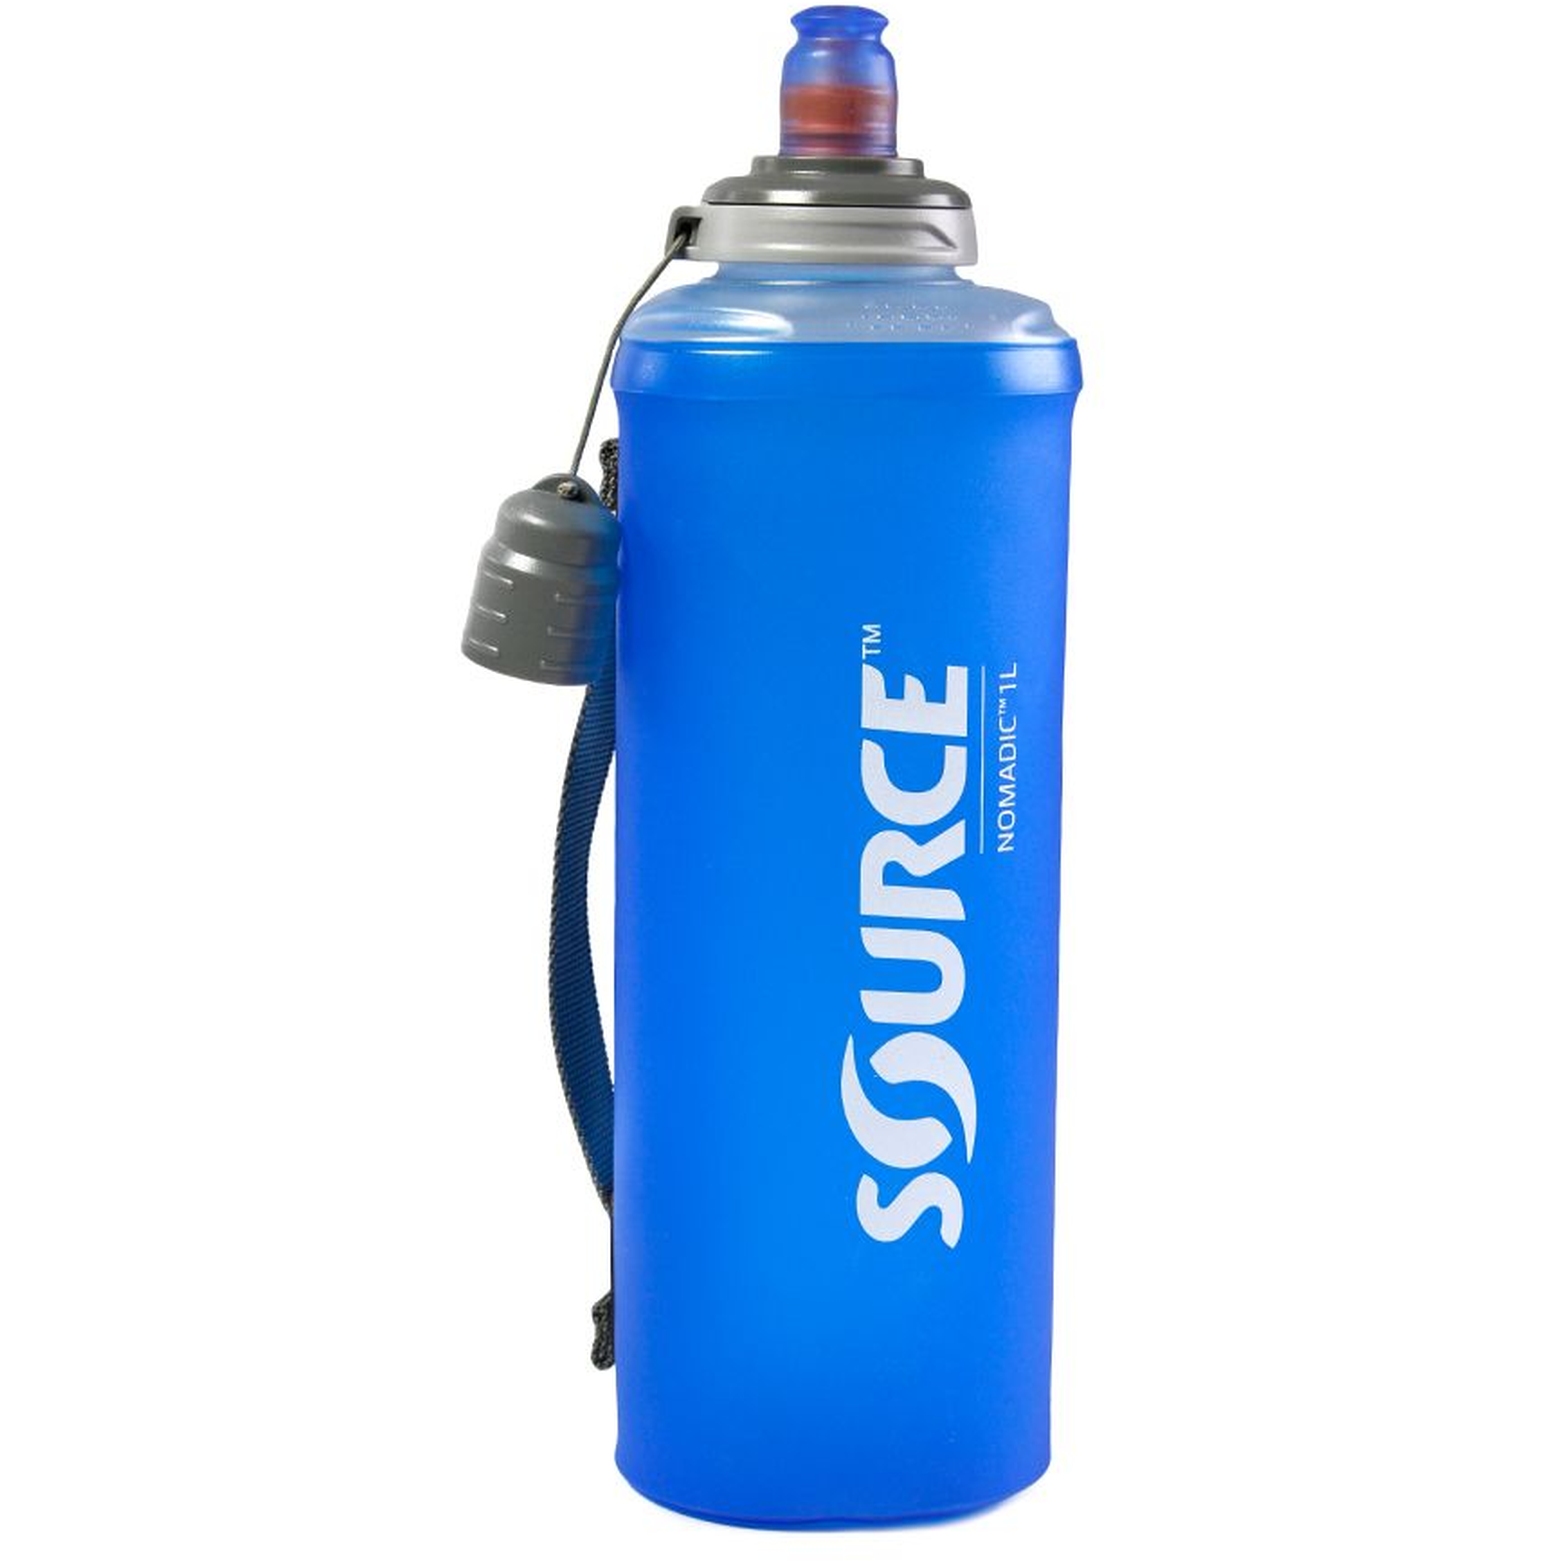 Productfoto van Source Nomadic Foldable Bottle 1L - Blue